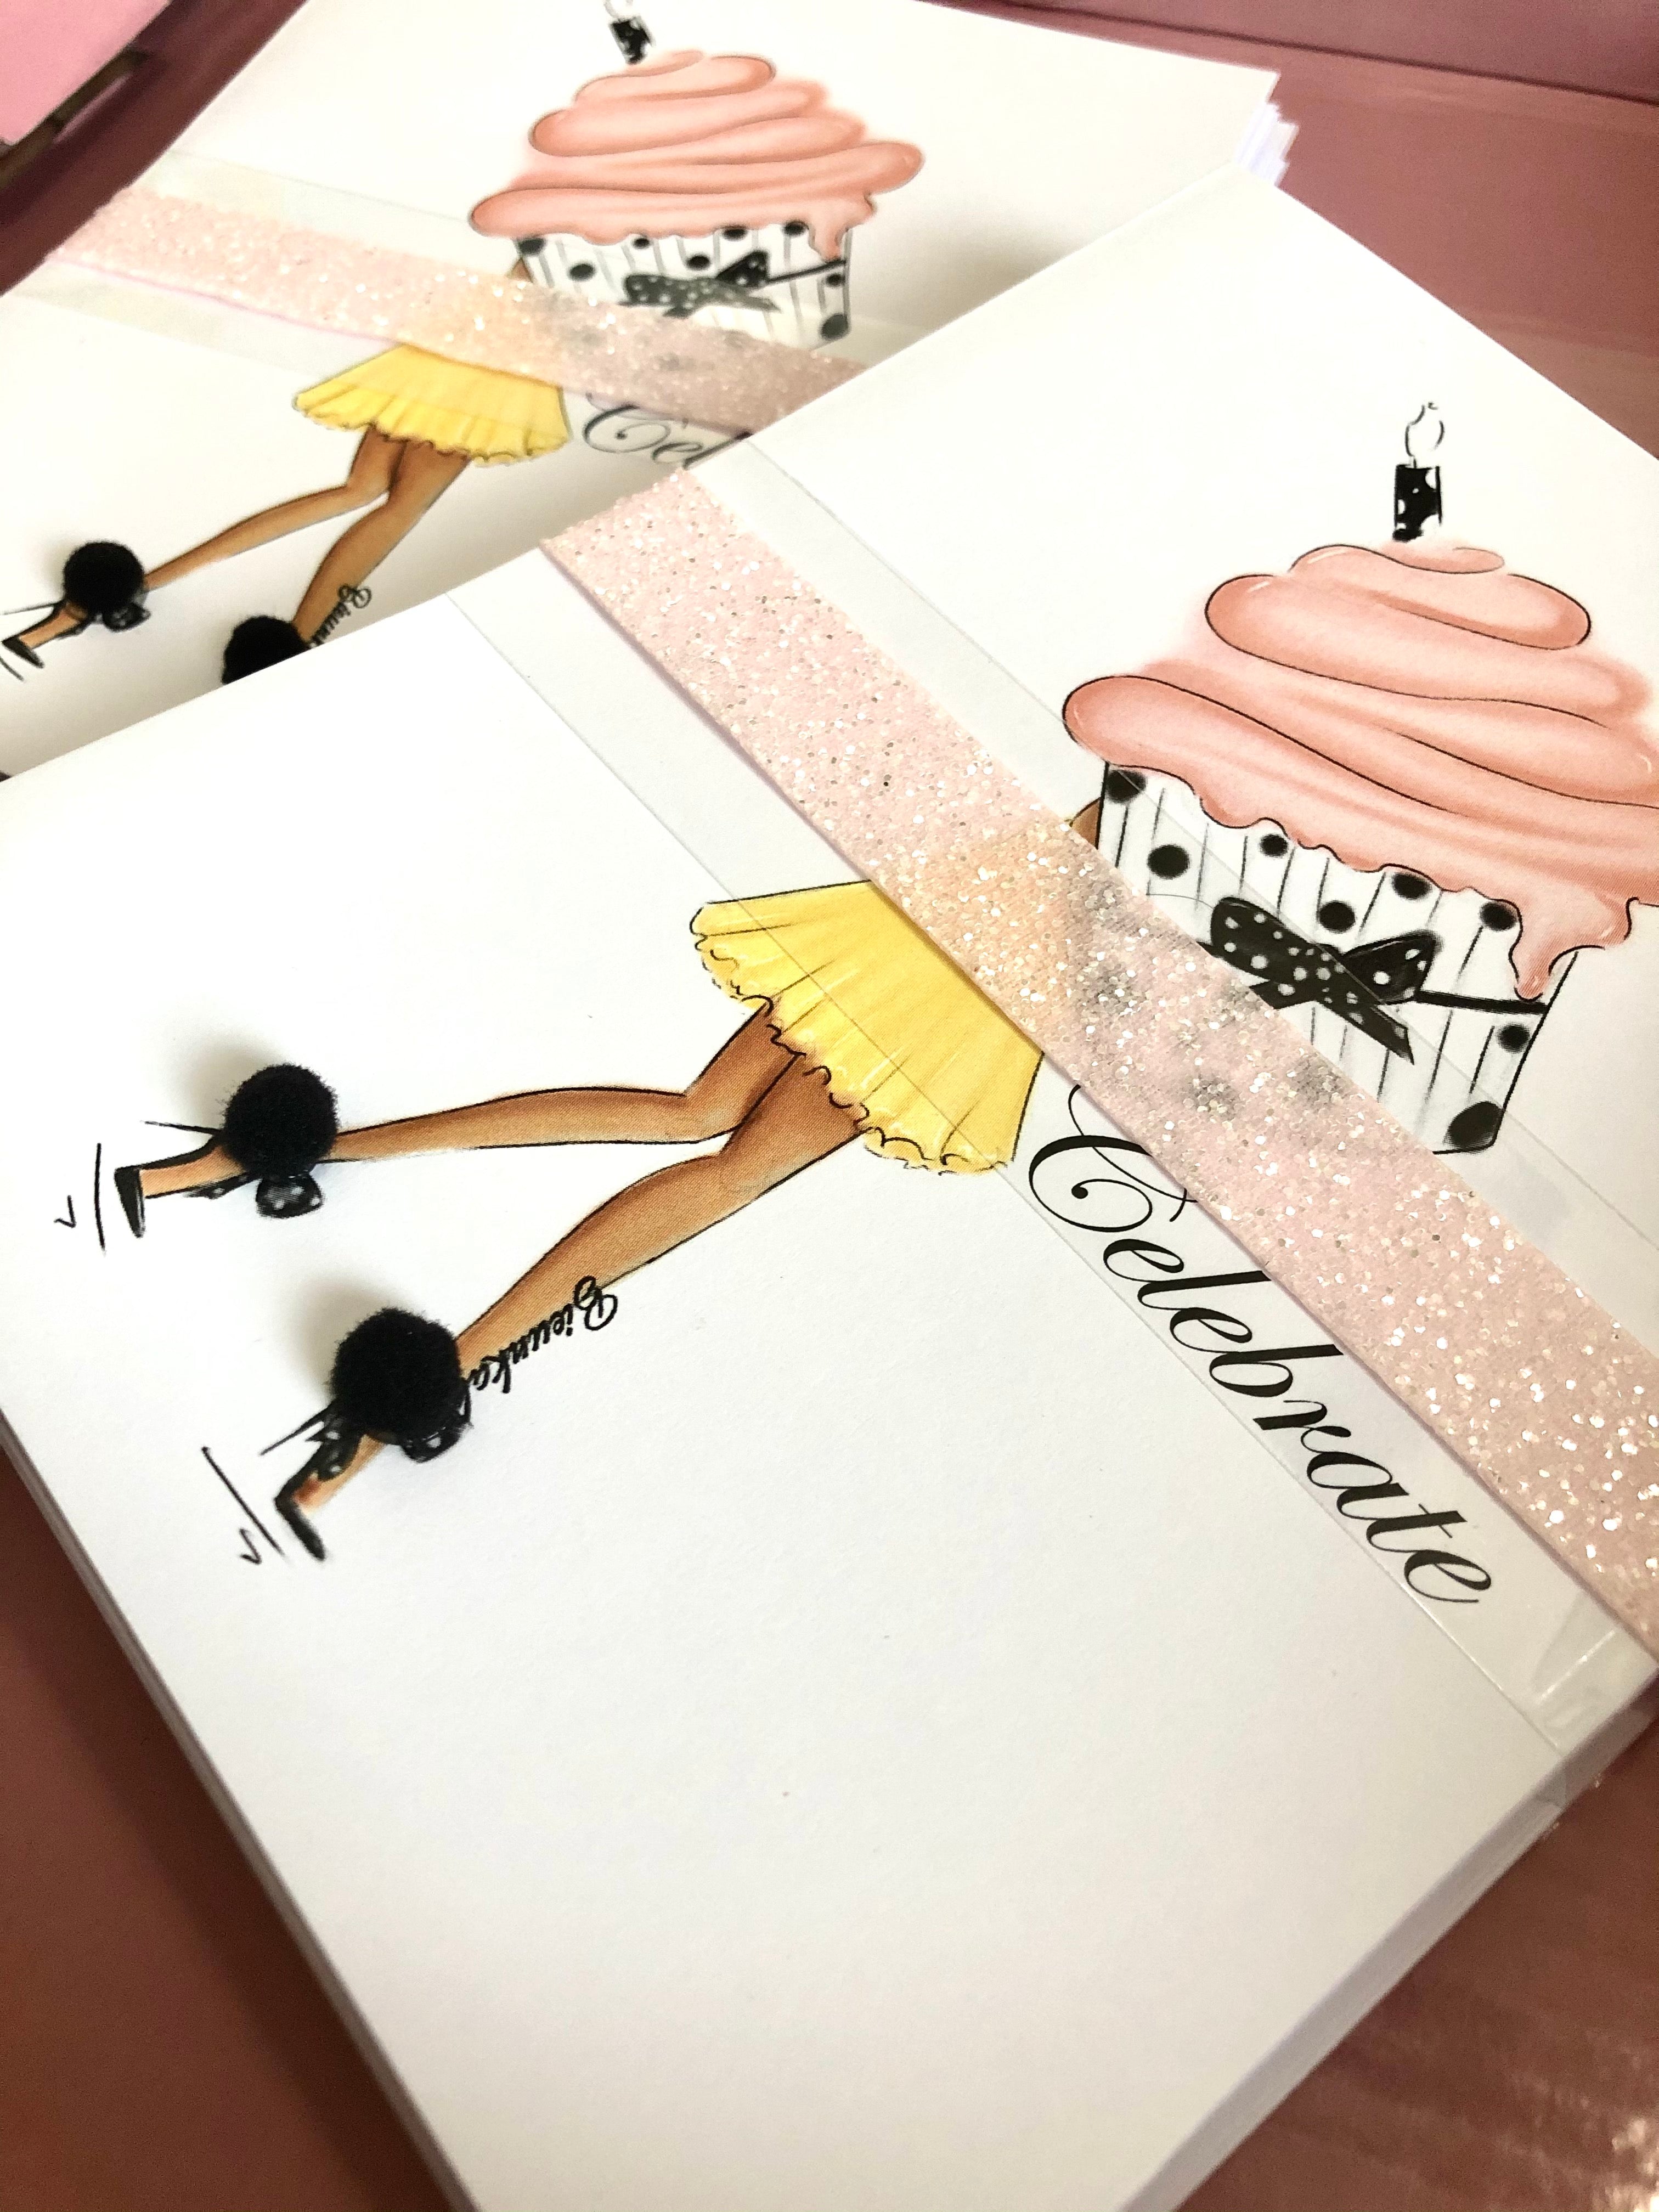 "Sweets Overload" Card - Multiple Skintones